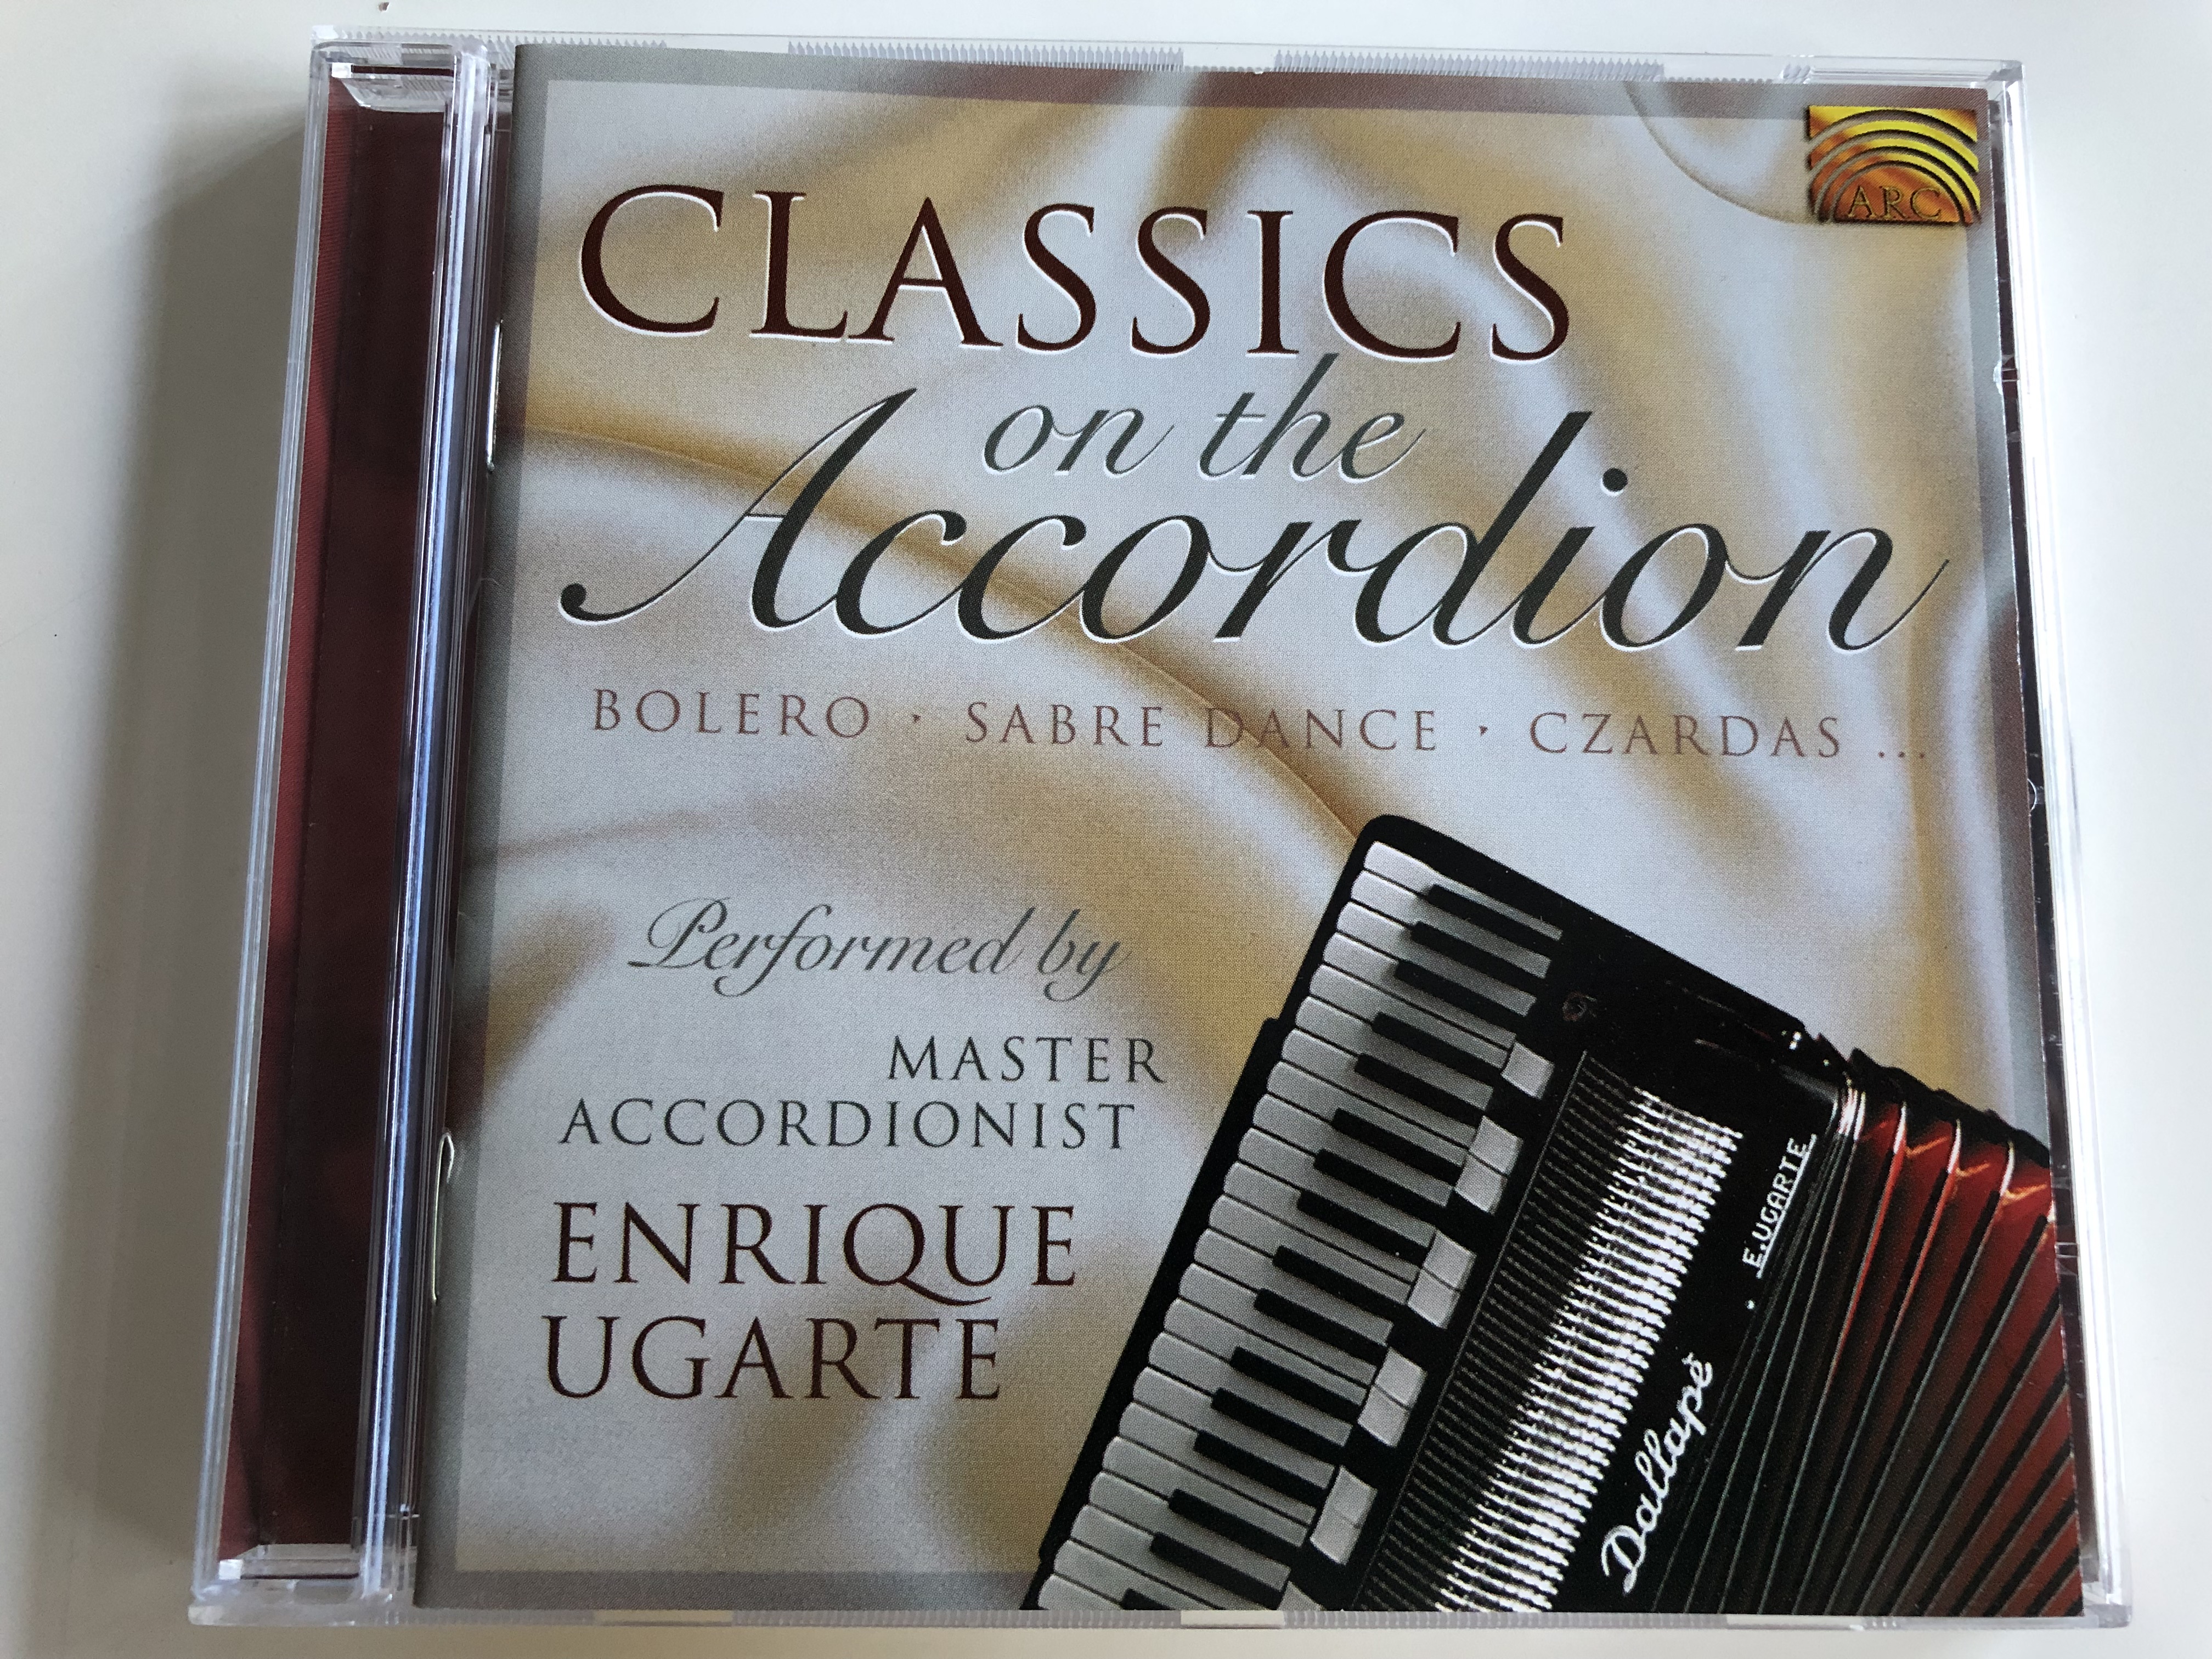 classics-on-the-accordion-bolero-sabre-dance-czardas-performed-by-master-accordionist-enrique-ugarte-audio-cd-2001-eucd-1645-1-.jpg